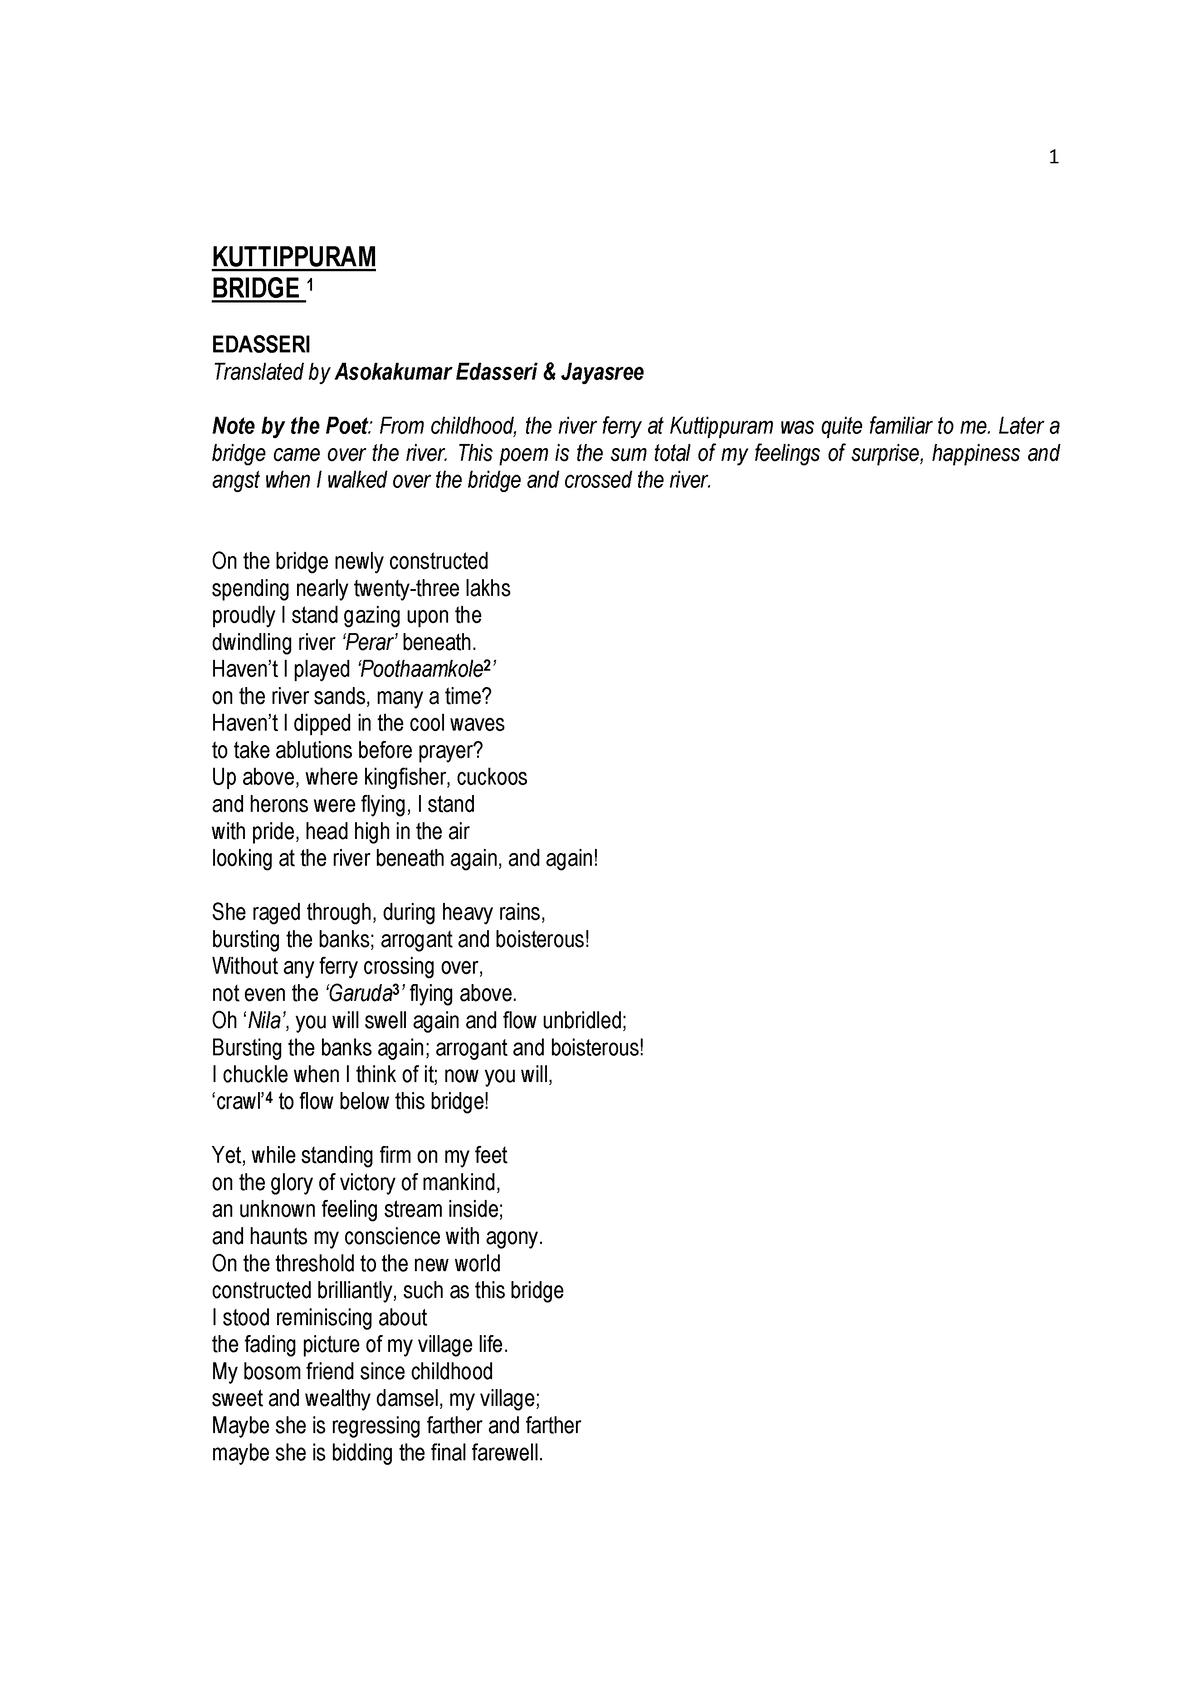 kuttippuram bridge poem essay in english